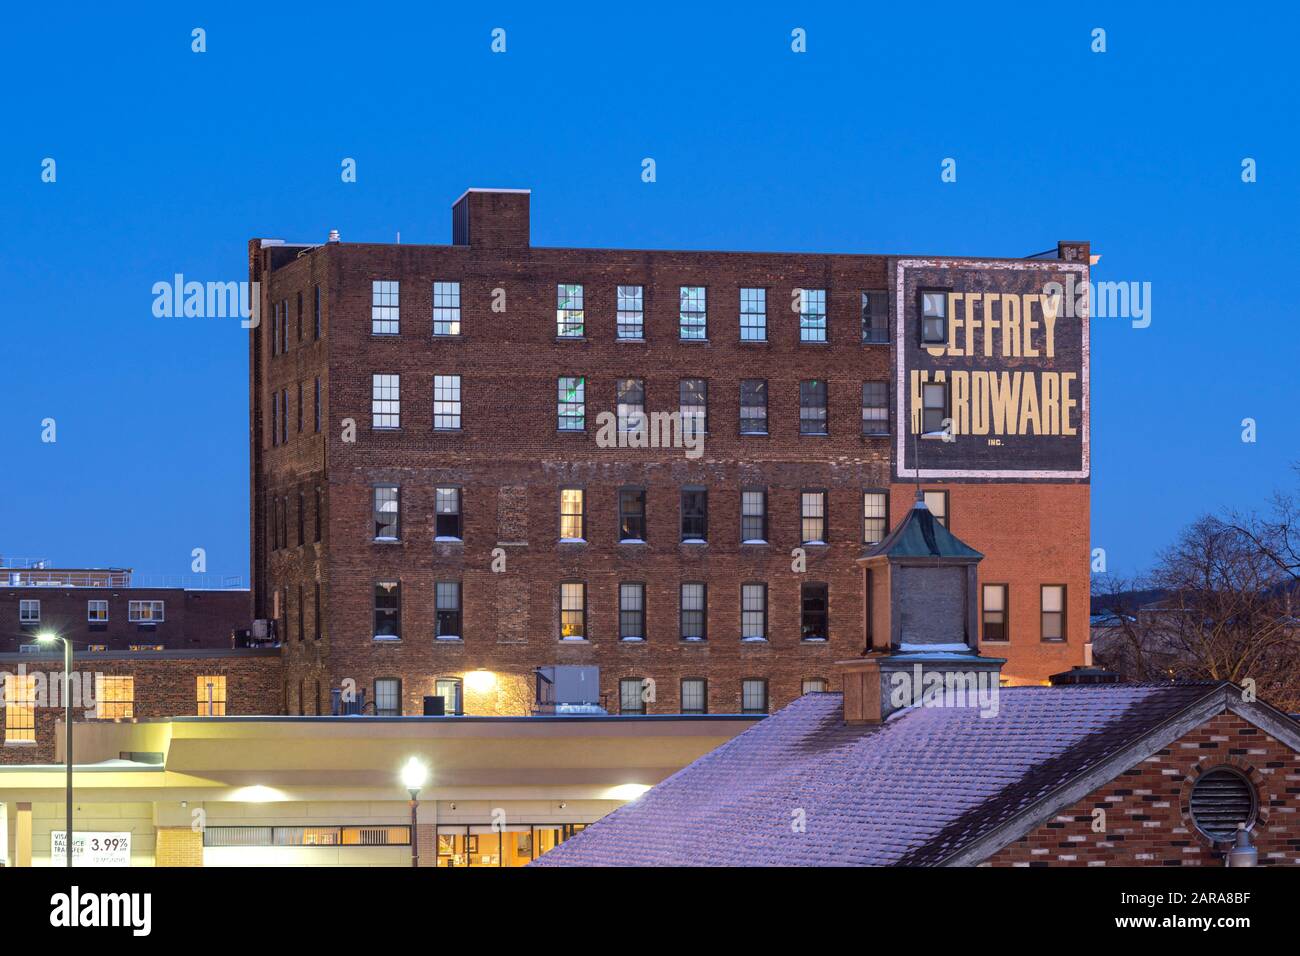 Utica, NEW YORK - 20. JANUAR 2012: Closeup Night View of Whiffen Robyat Building, Im National Register of Historic Platces, Auf 327 Blee Gelistet Stockfoto